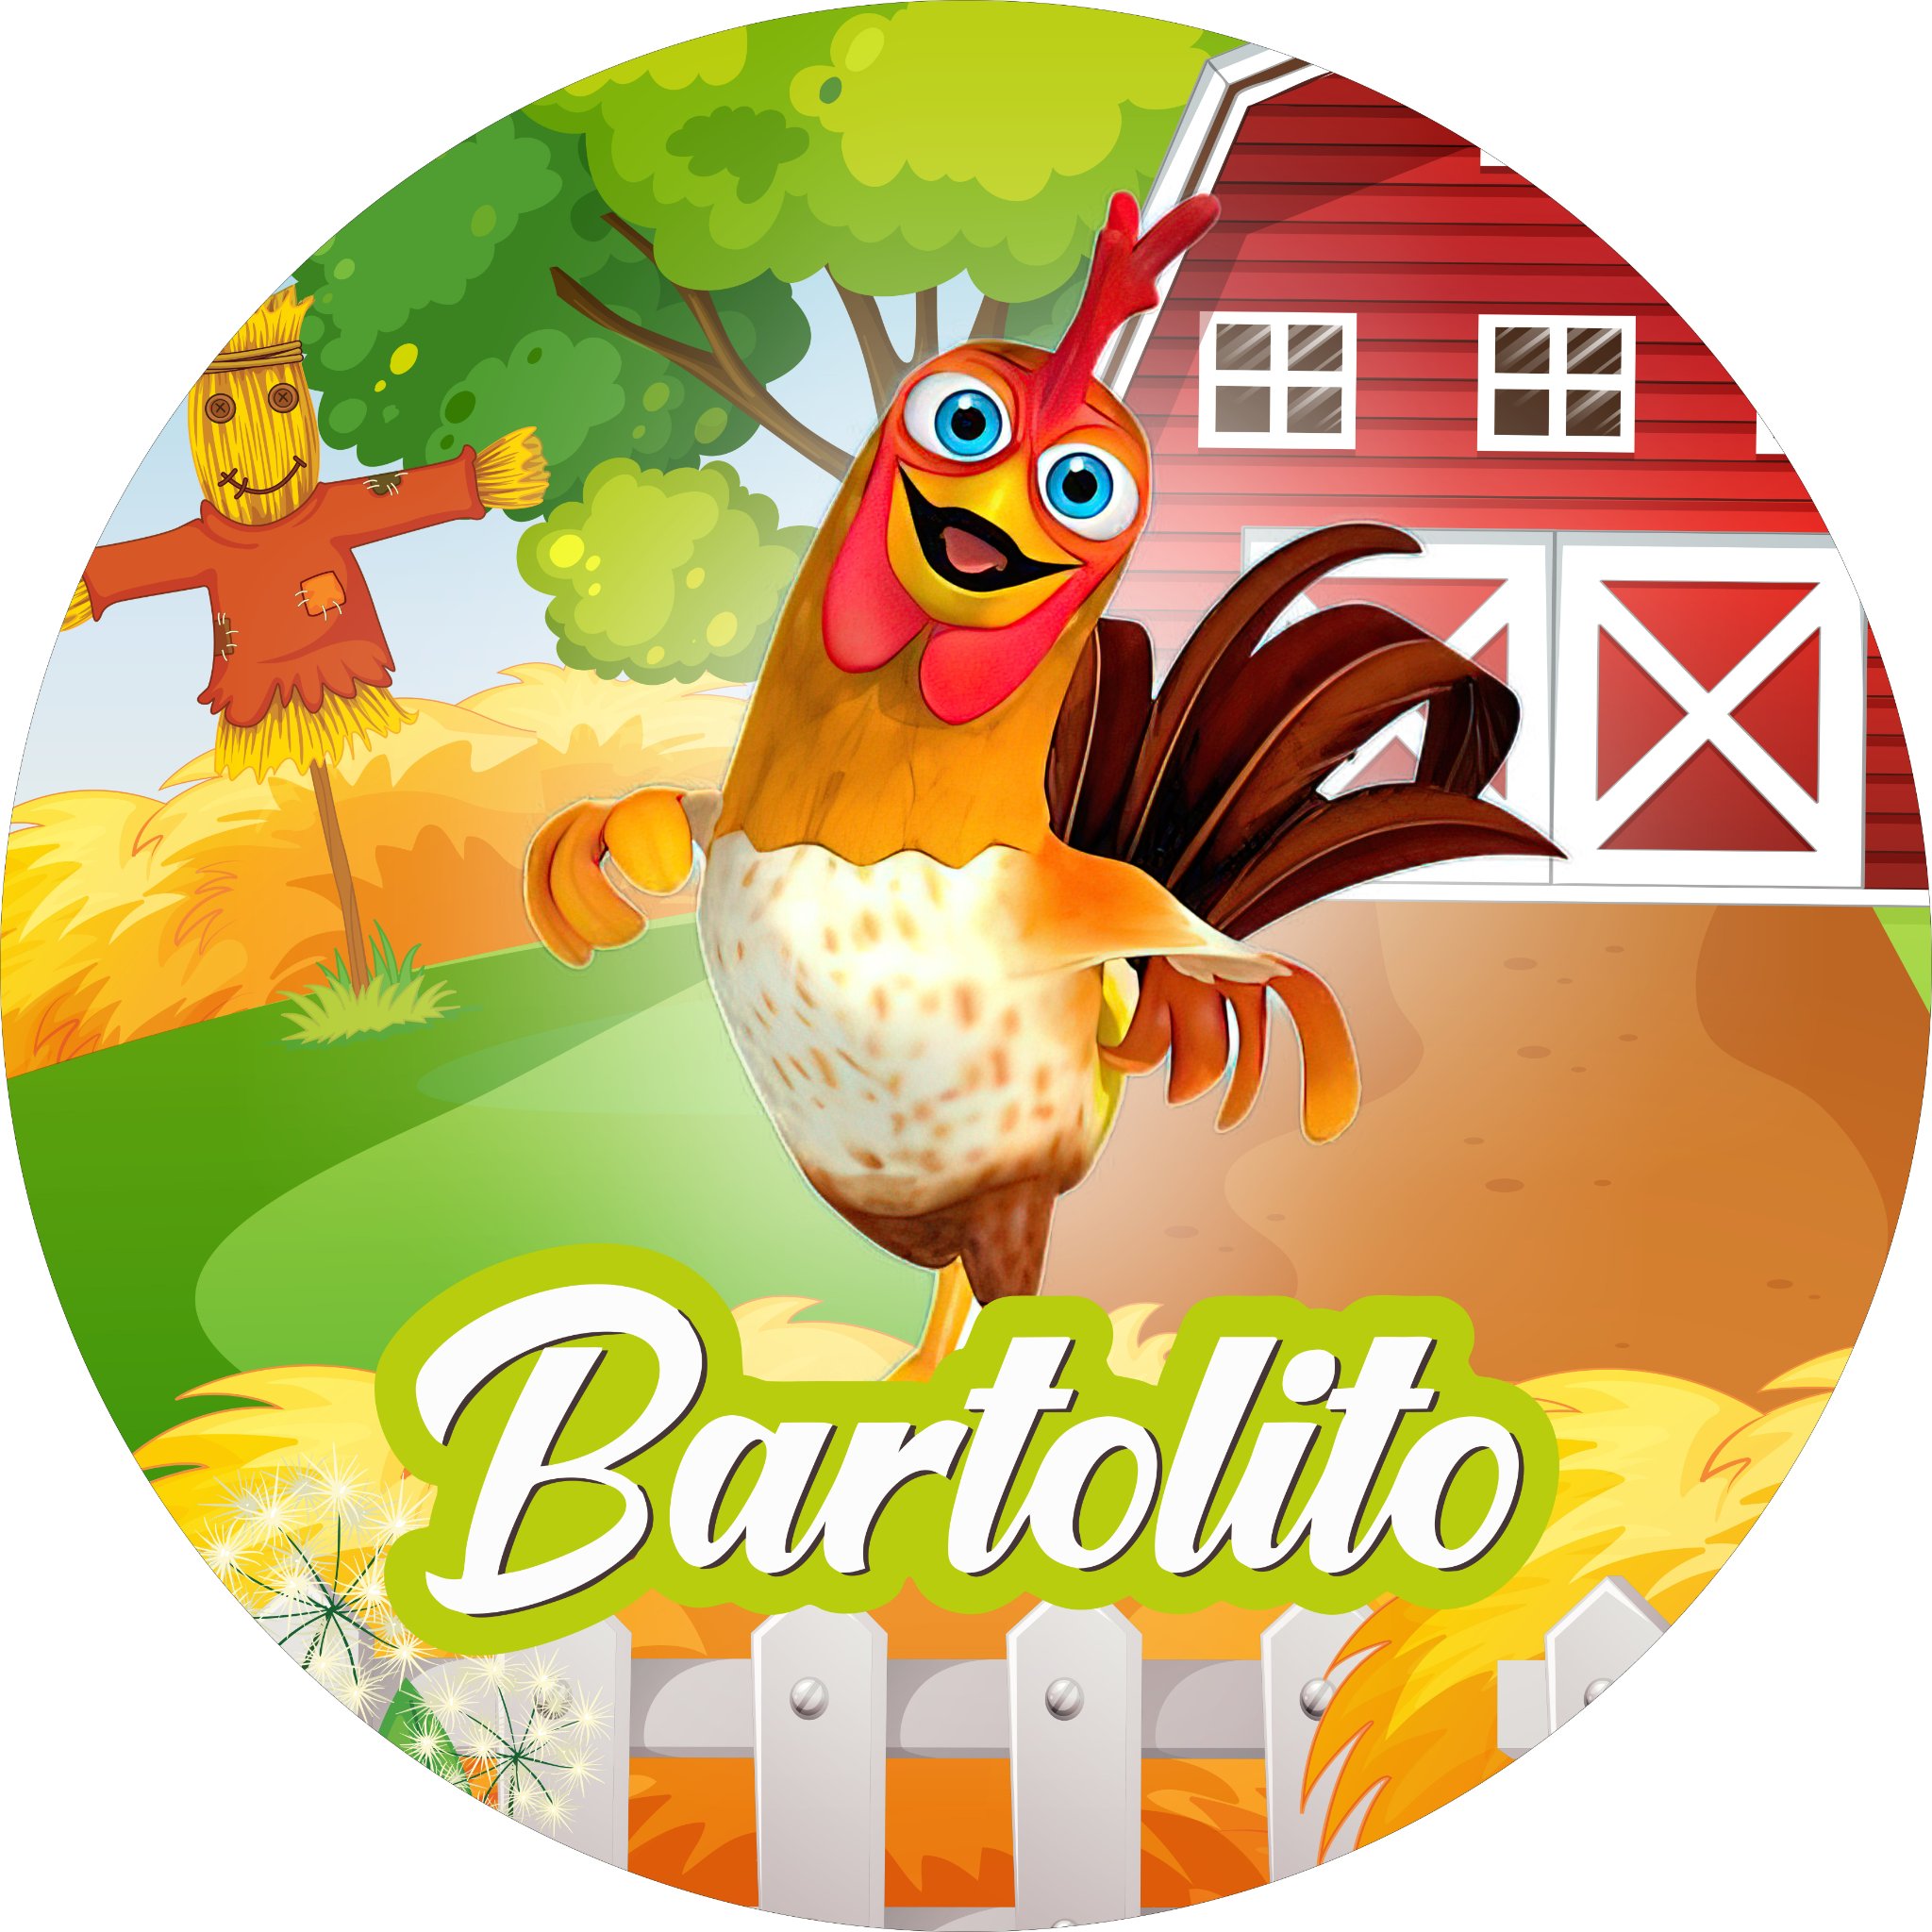 BACKING BARTOLITO – Adorable